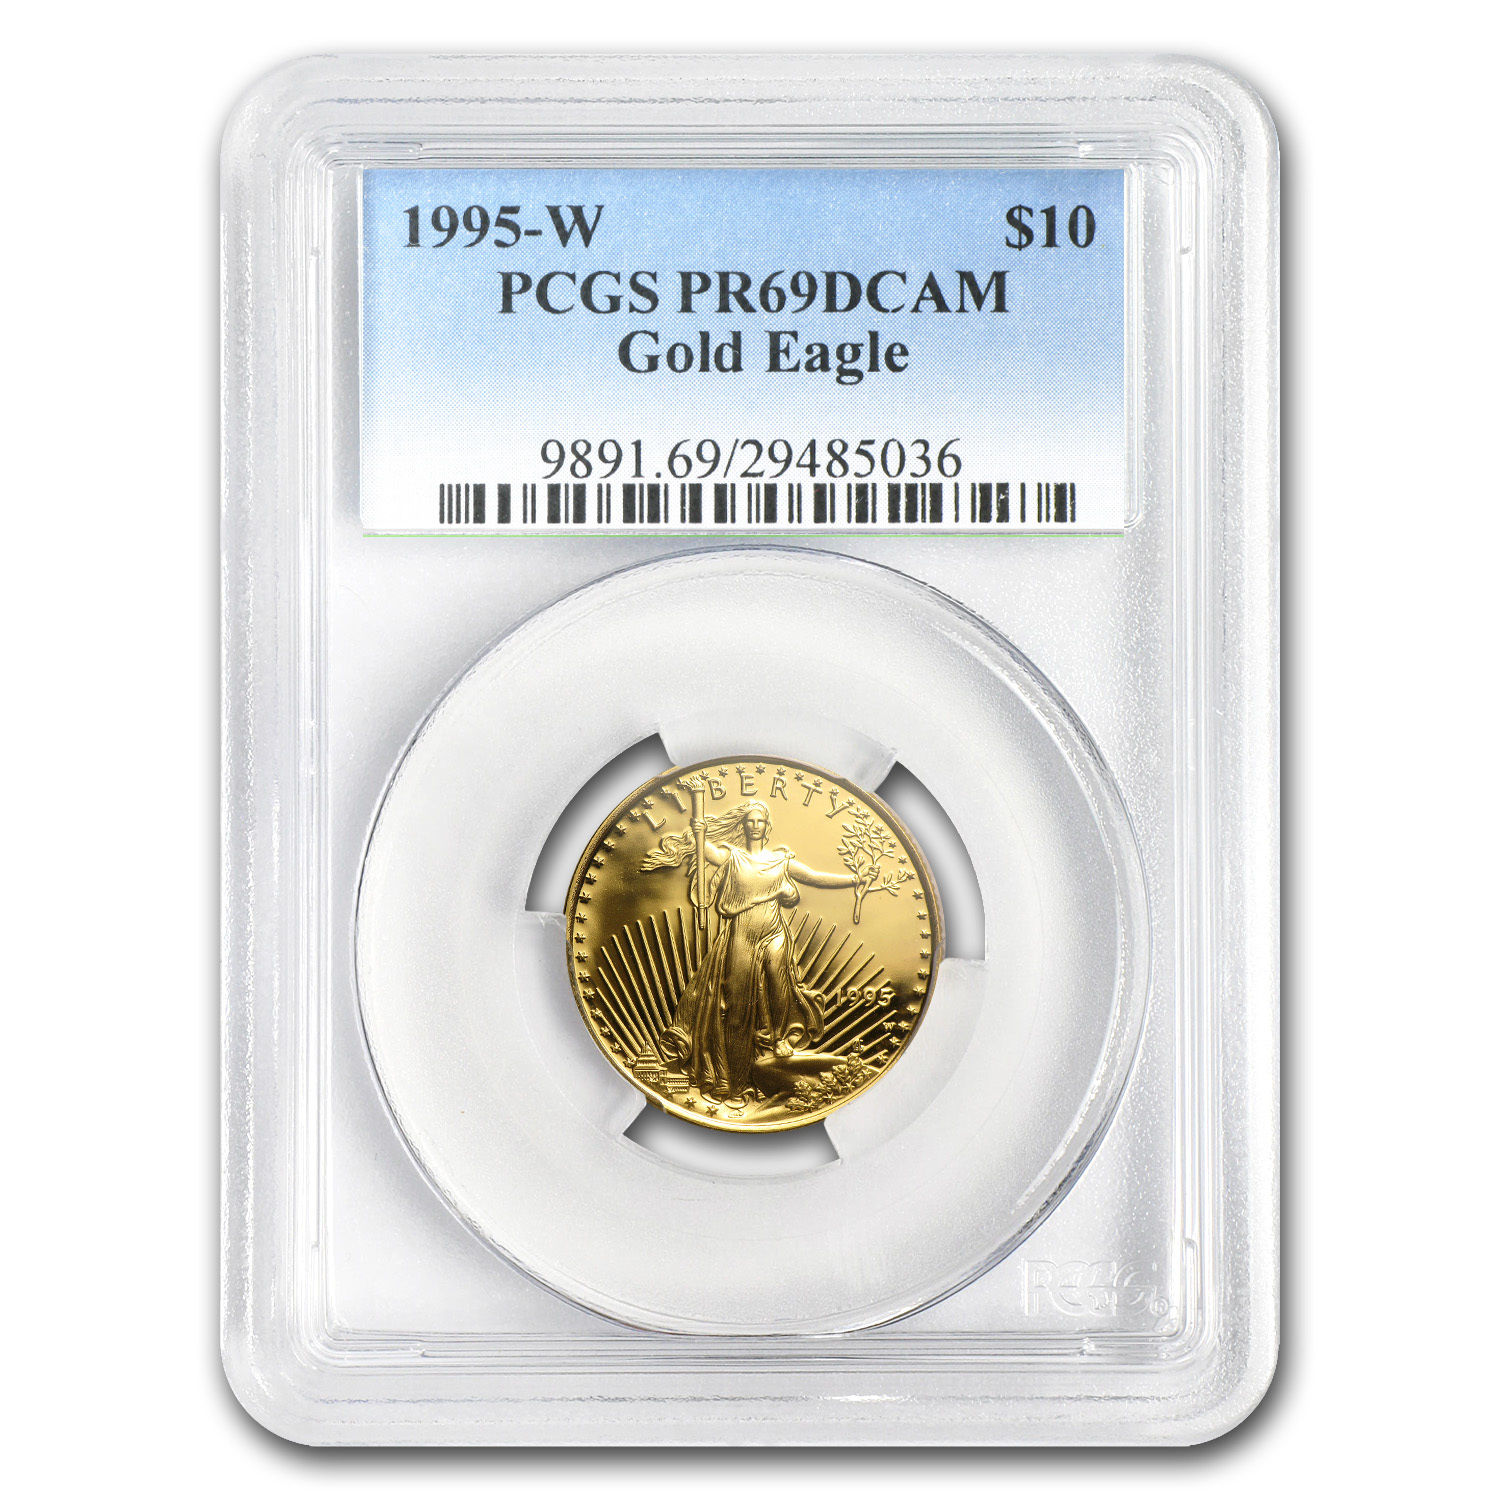 1/4 oz Proof Gold American Eagle PR-69 PCGS (Random Year) - SKU #83514